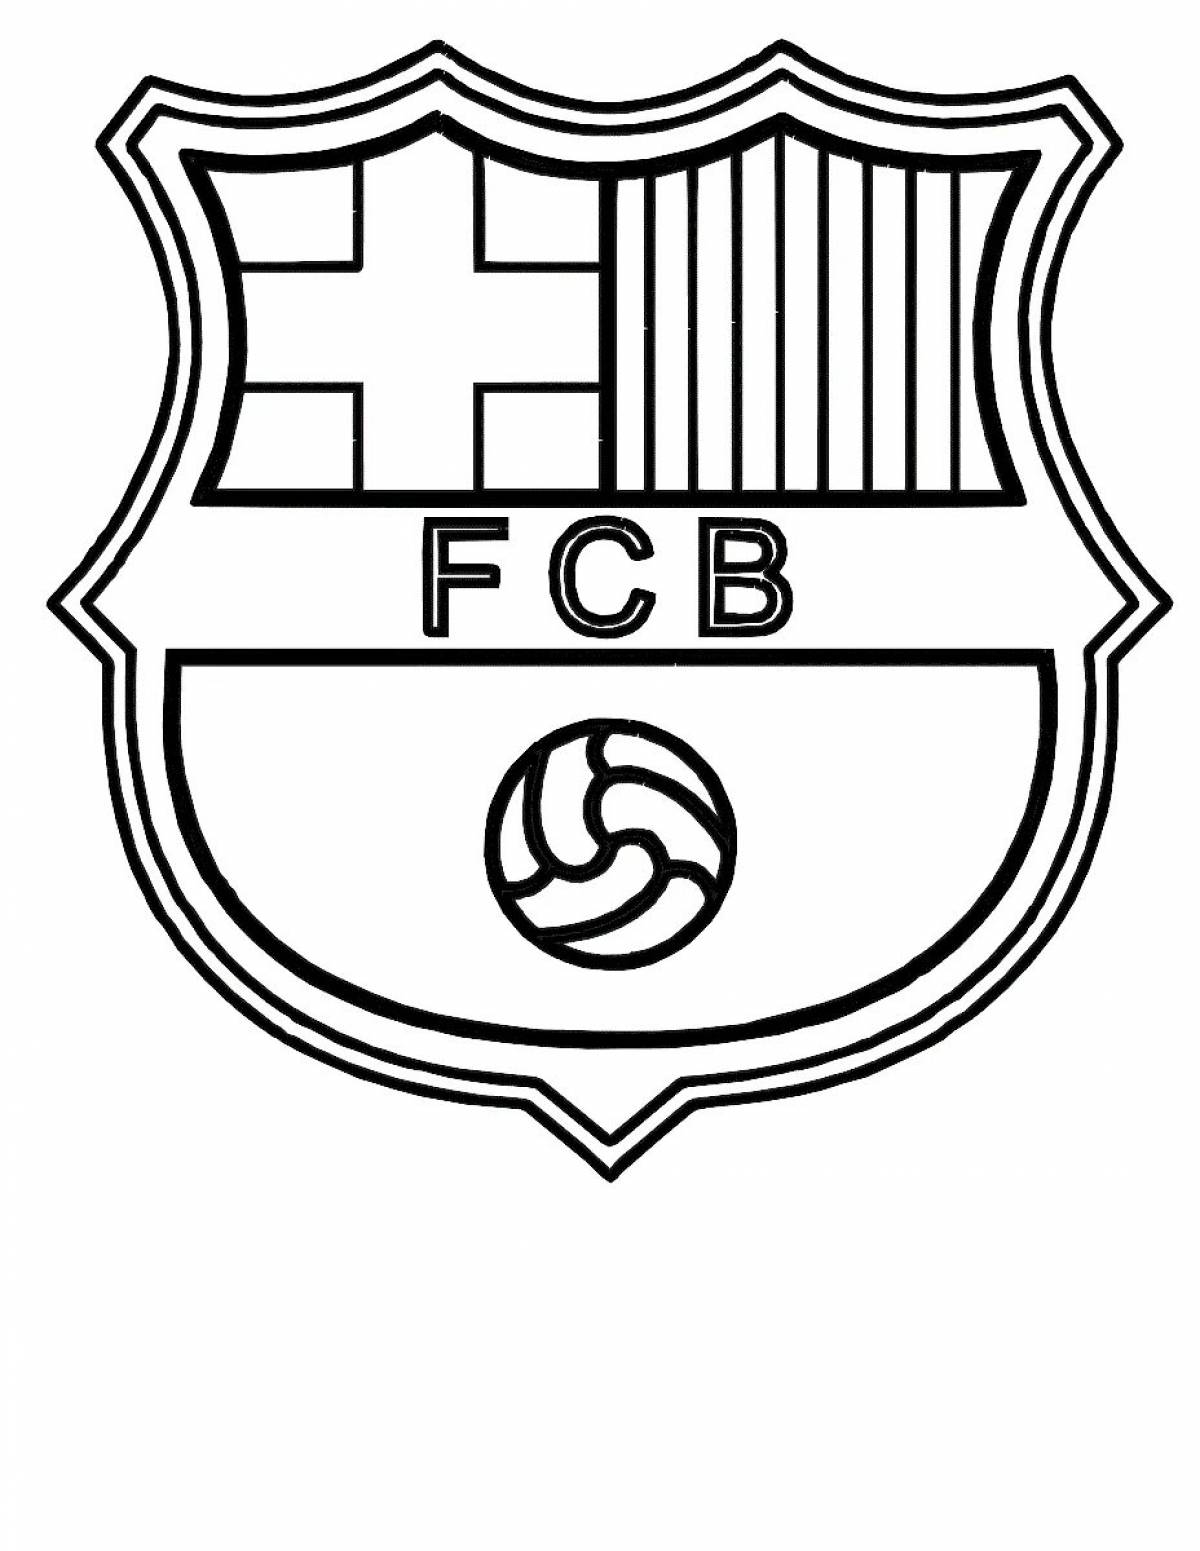 Barcelona emblem #6